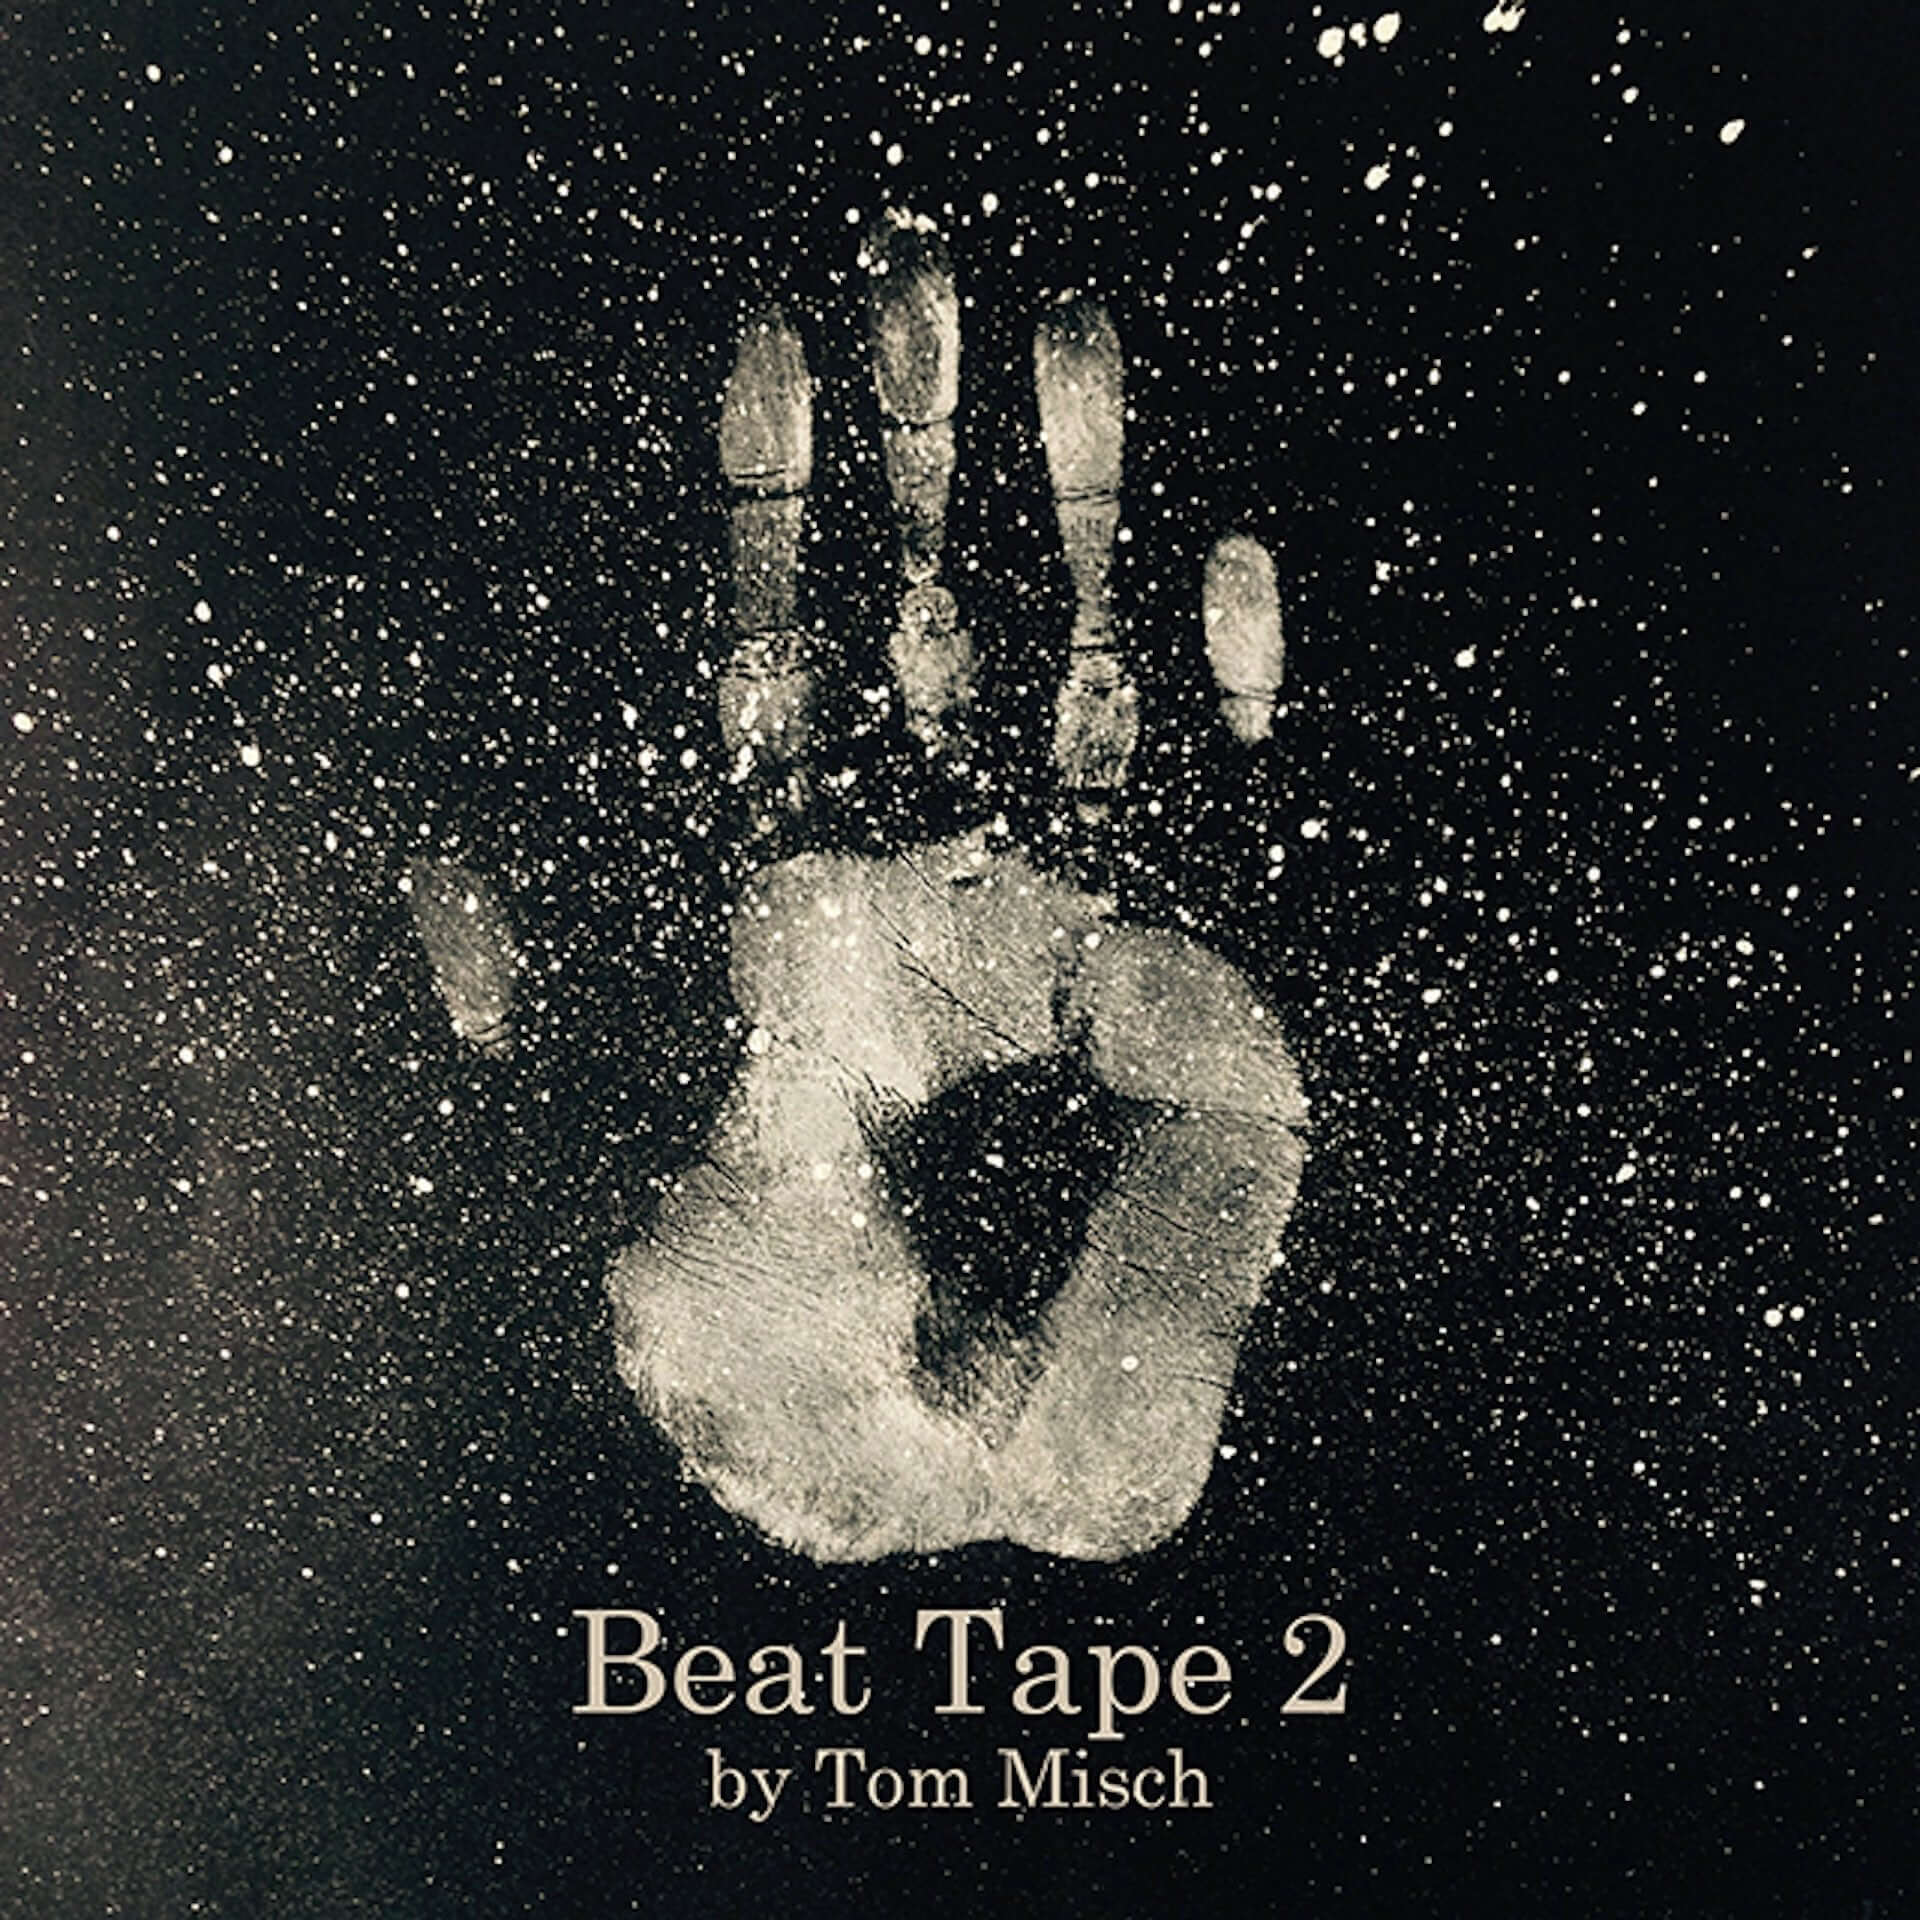 Tom Mischの傑作『Beat Tape 2』が5周年記念ゴールド盤LPでリリース決定！BEATINK公式サイトにて予約受付中 music2000821_tommisch_1-1920x1920